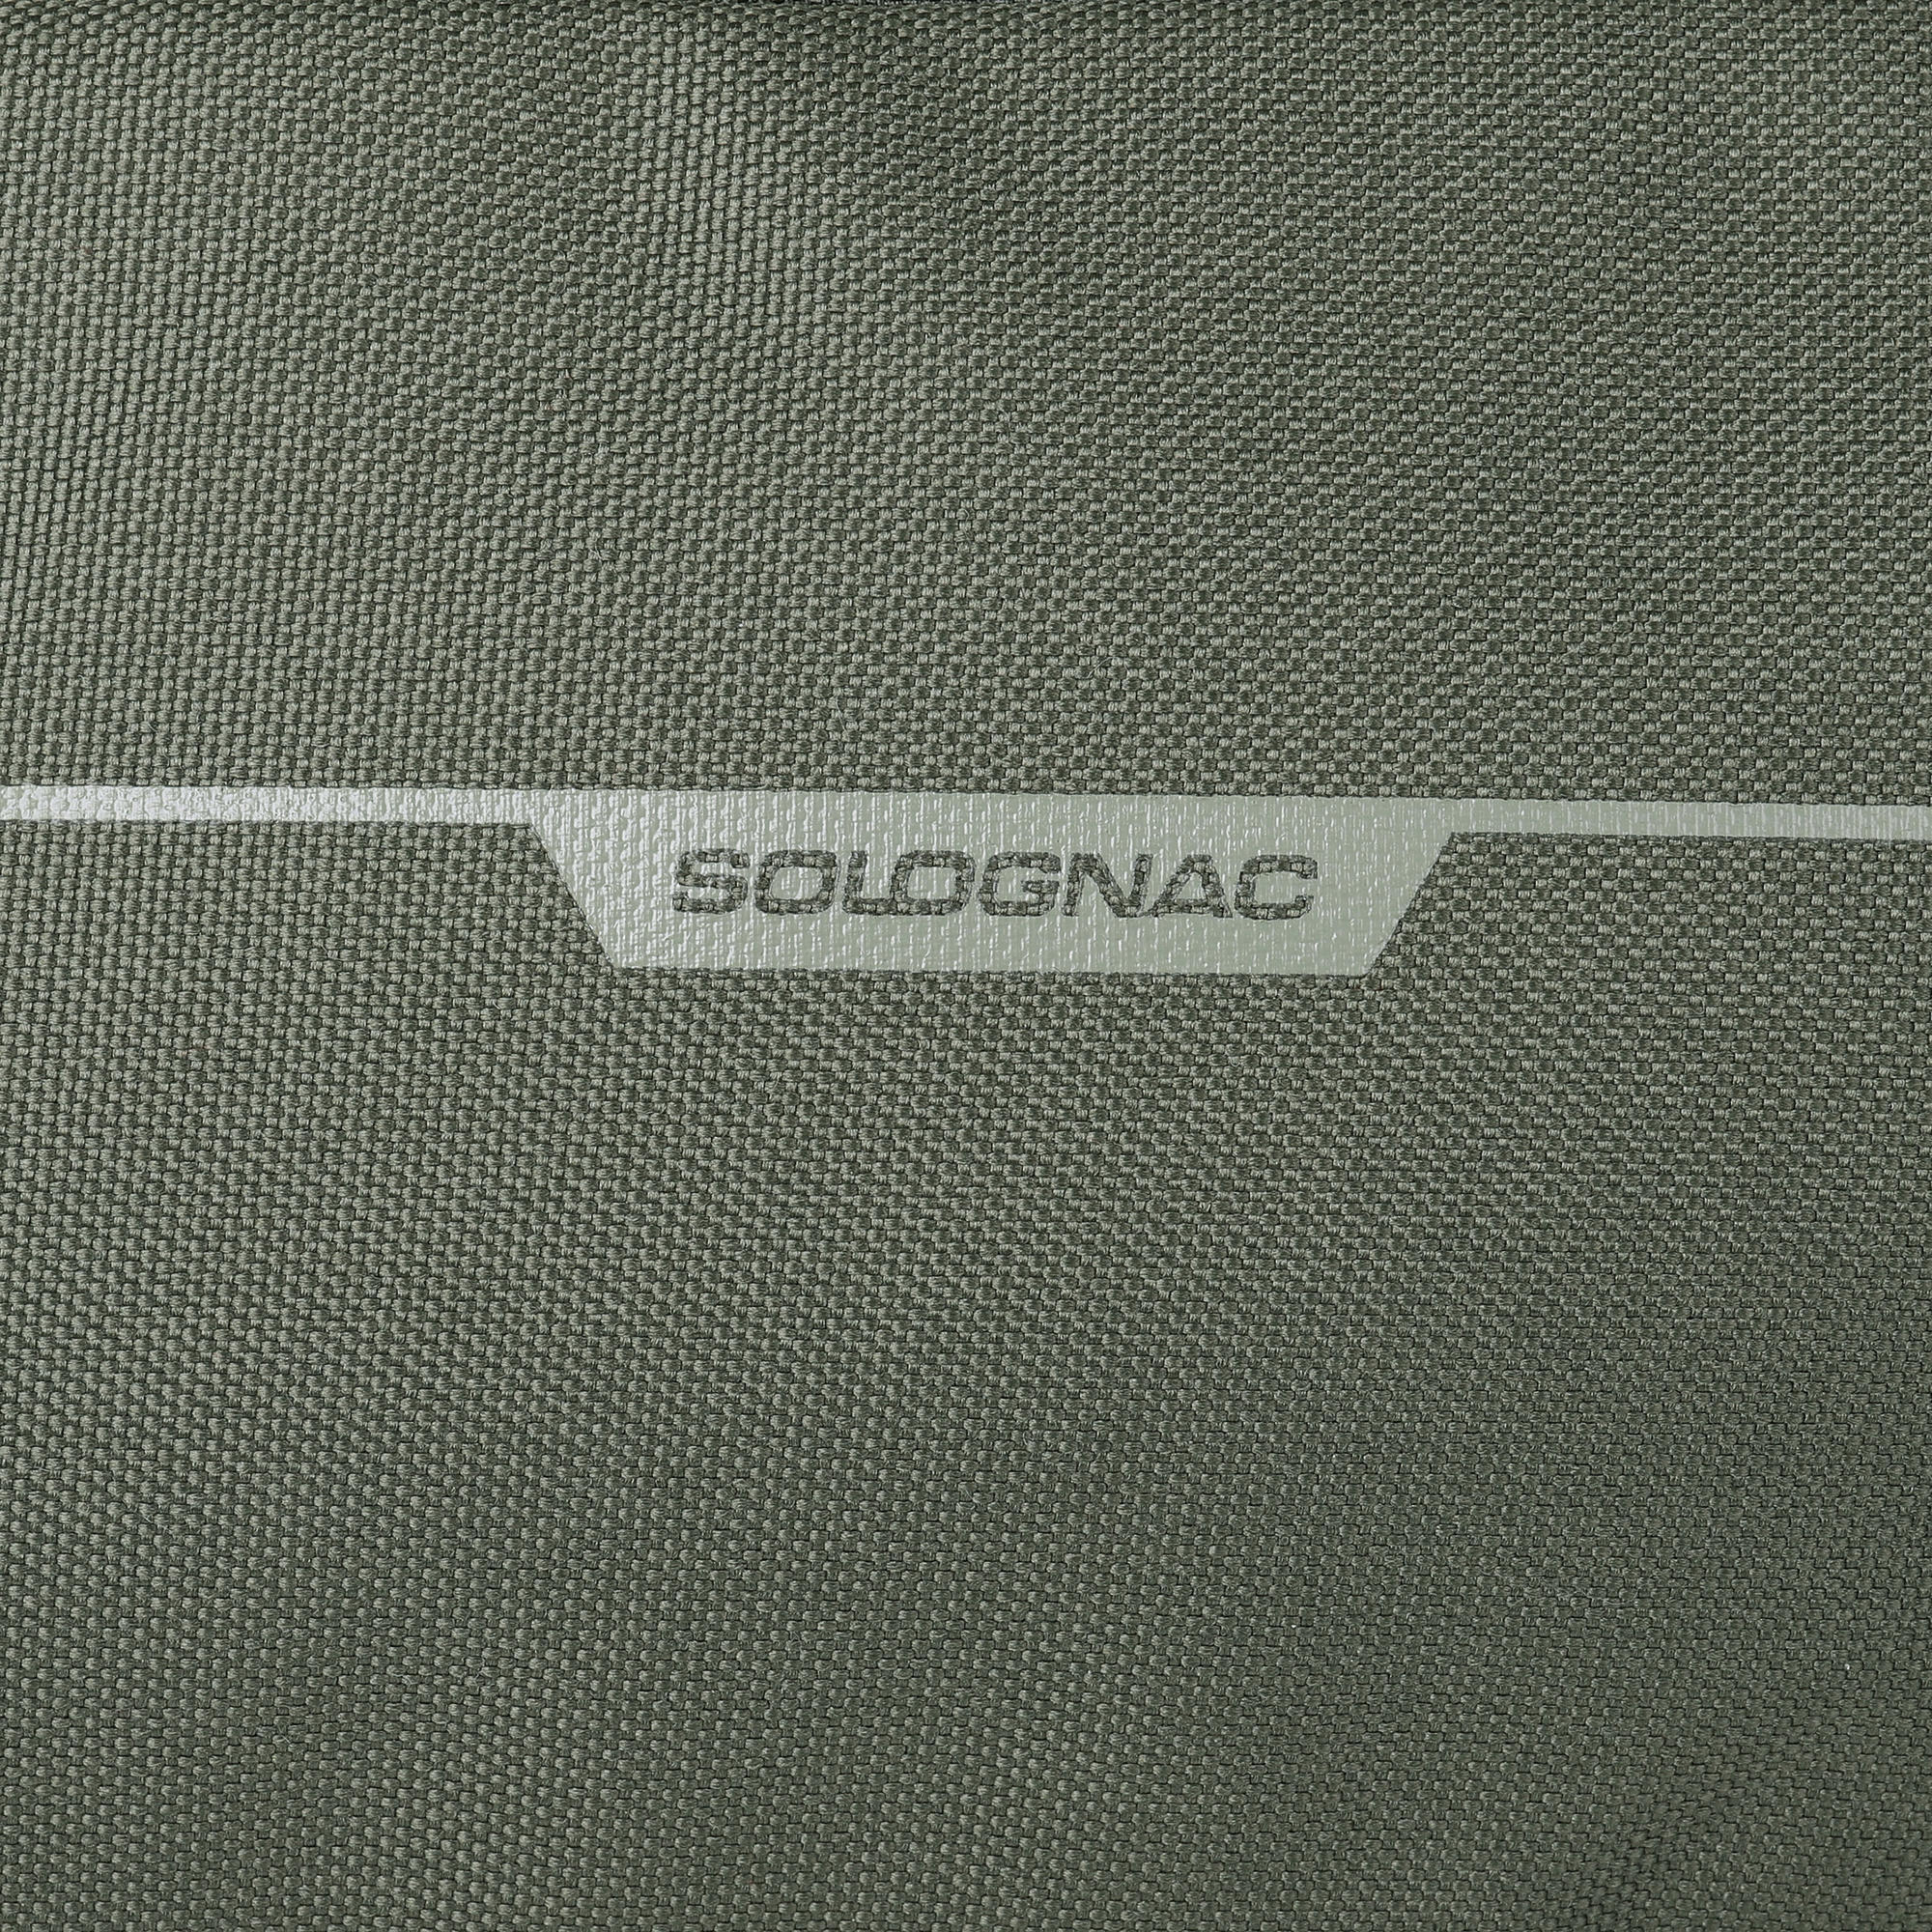 Hunting X-Access Waist Bag 7 Litre - Green - SOLOGNAC